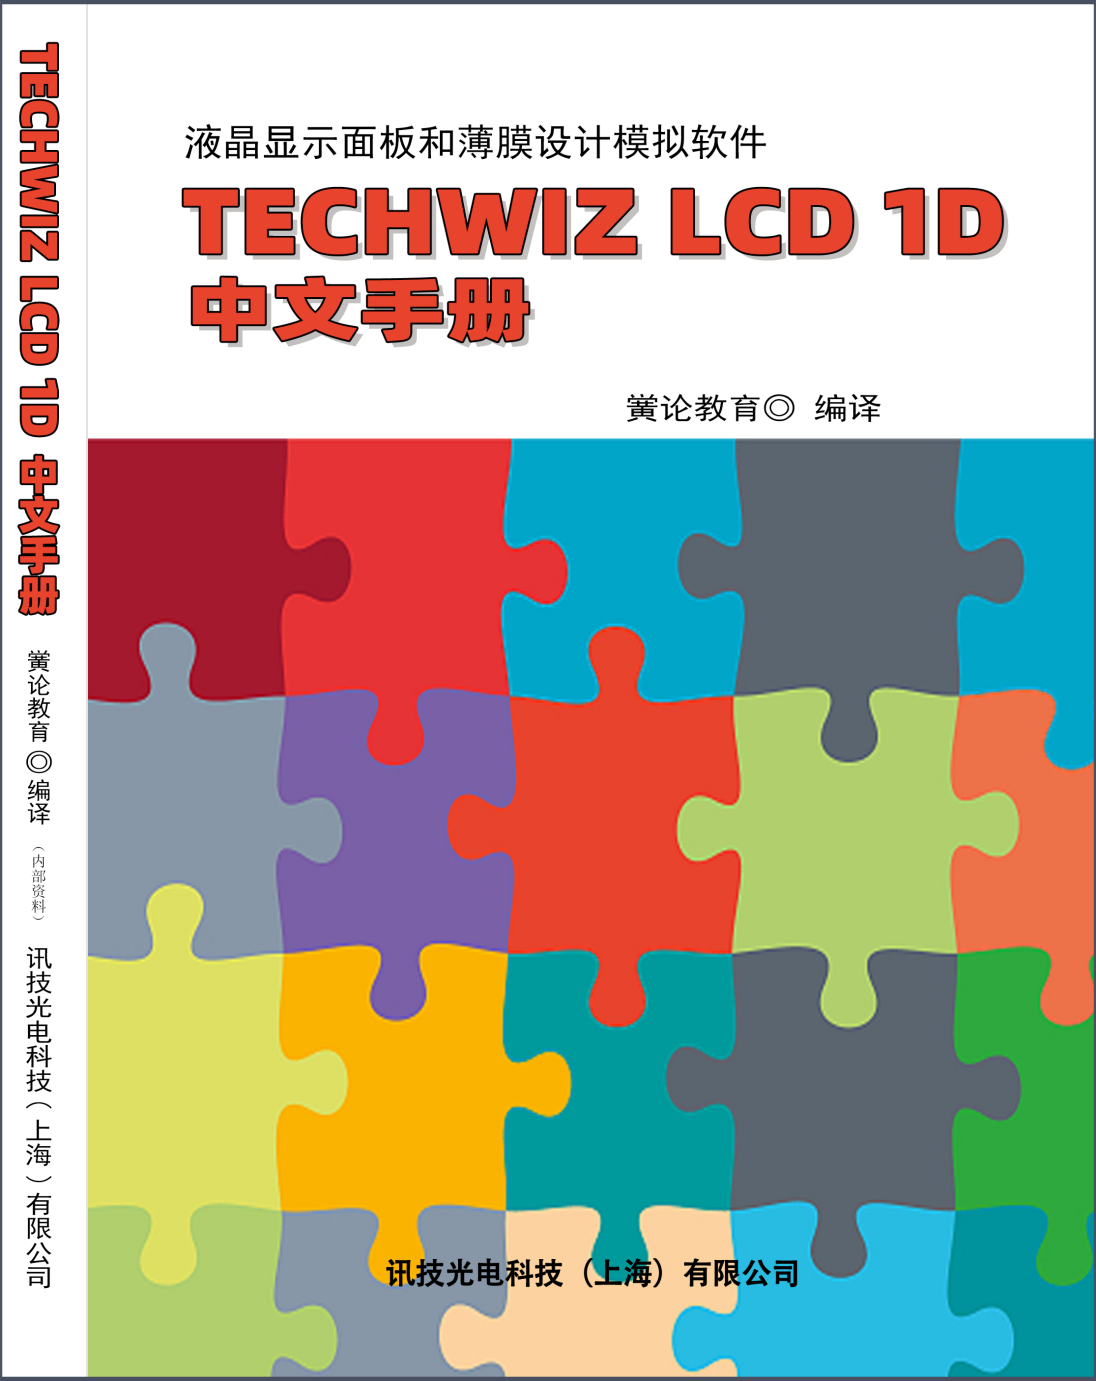 TechWiz LCD 1D中文手册